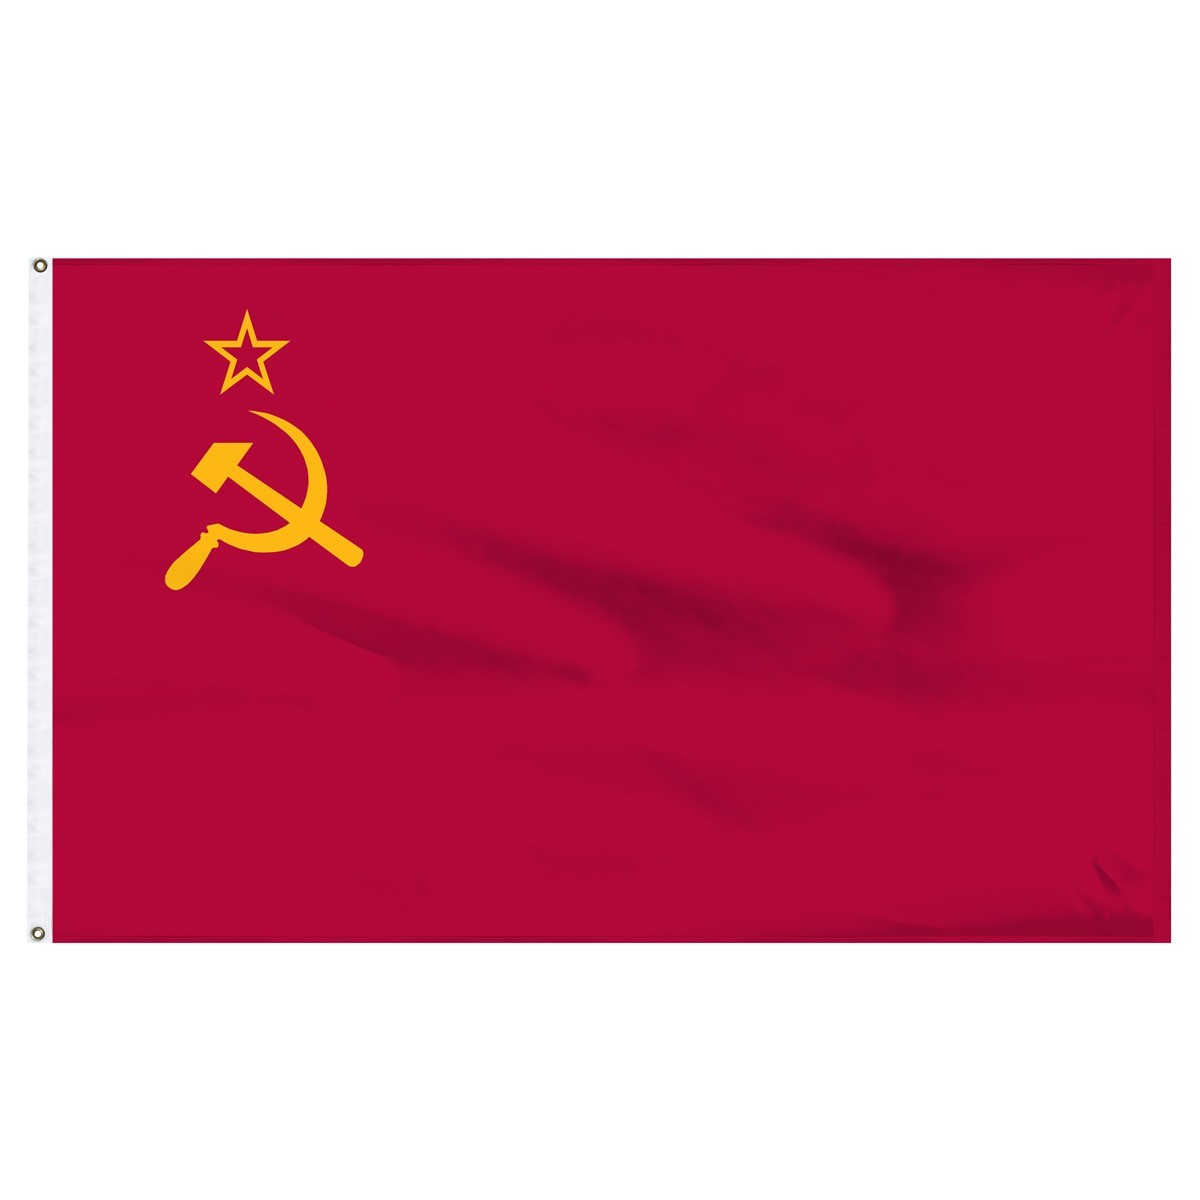 USSR 2' x 3' Outdoor Nylon Flag